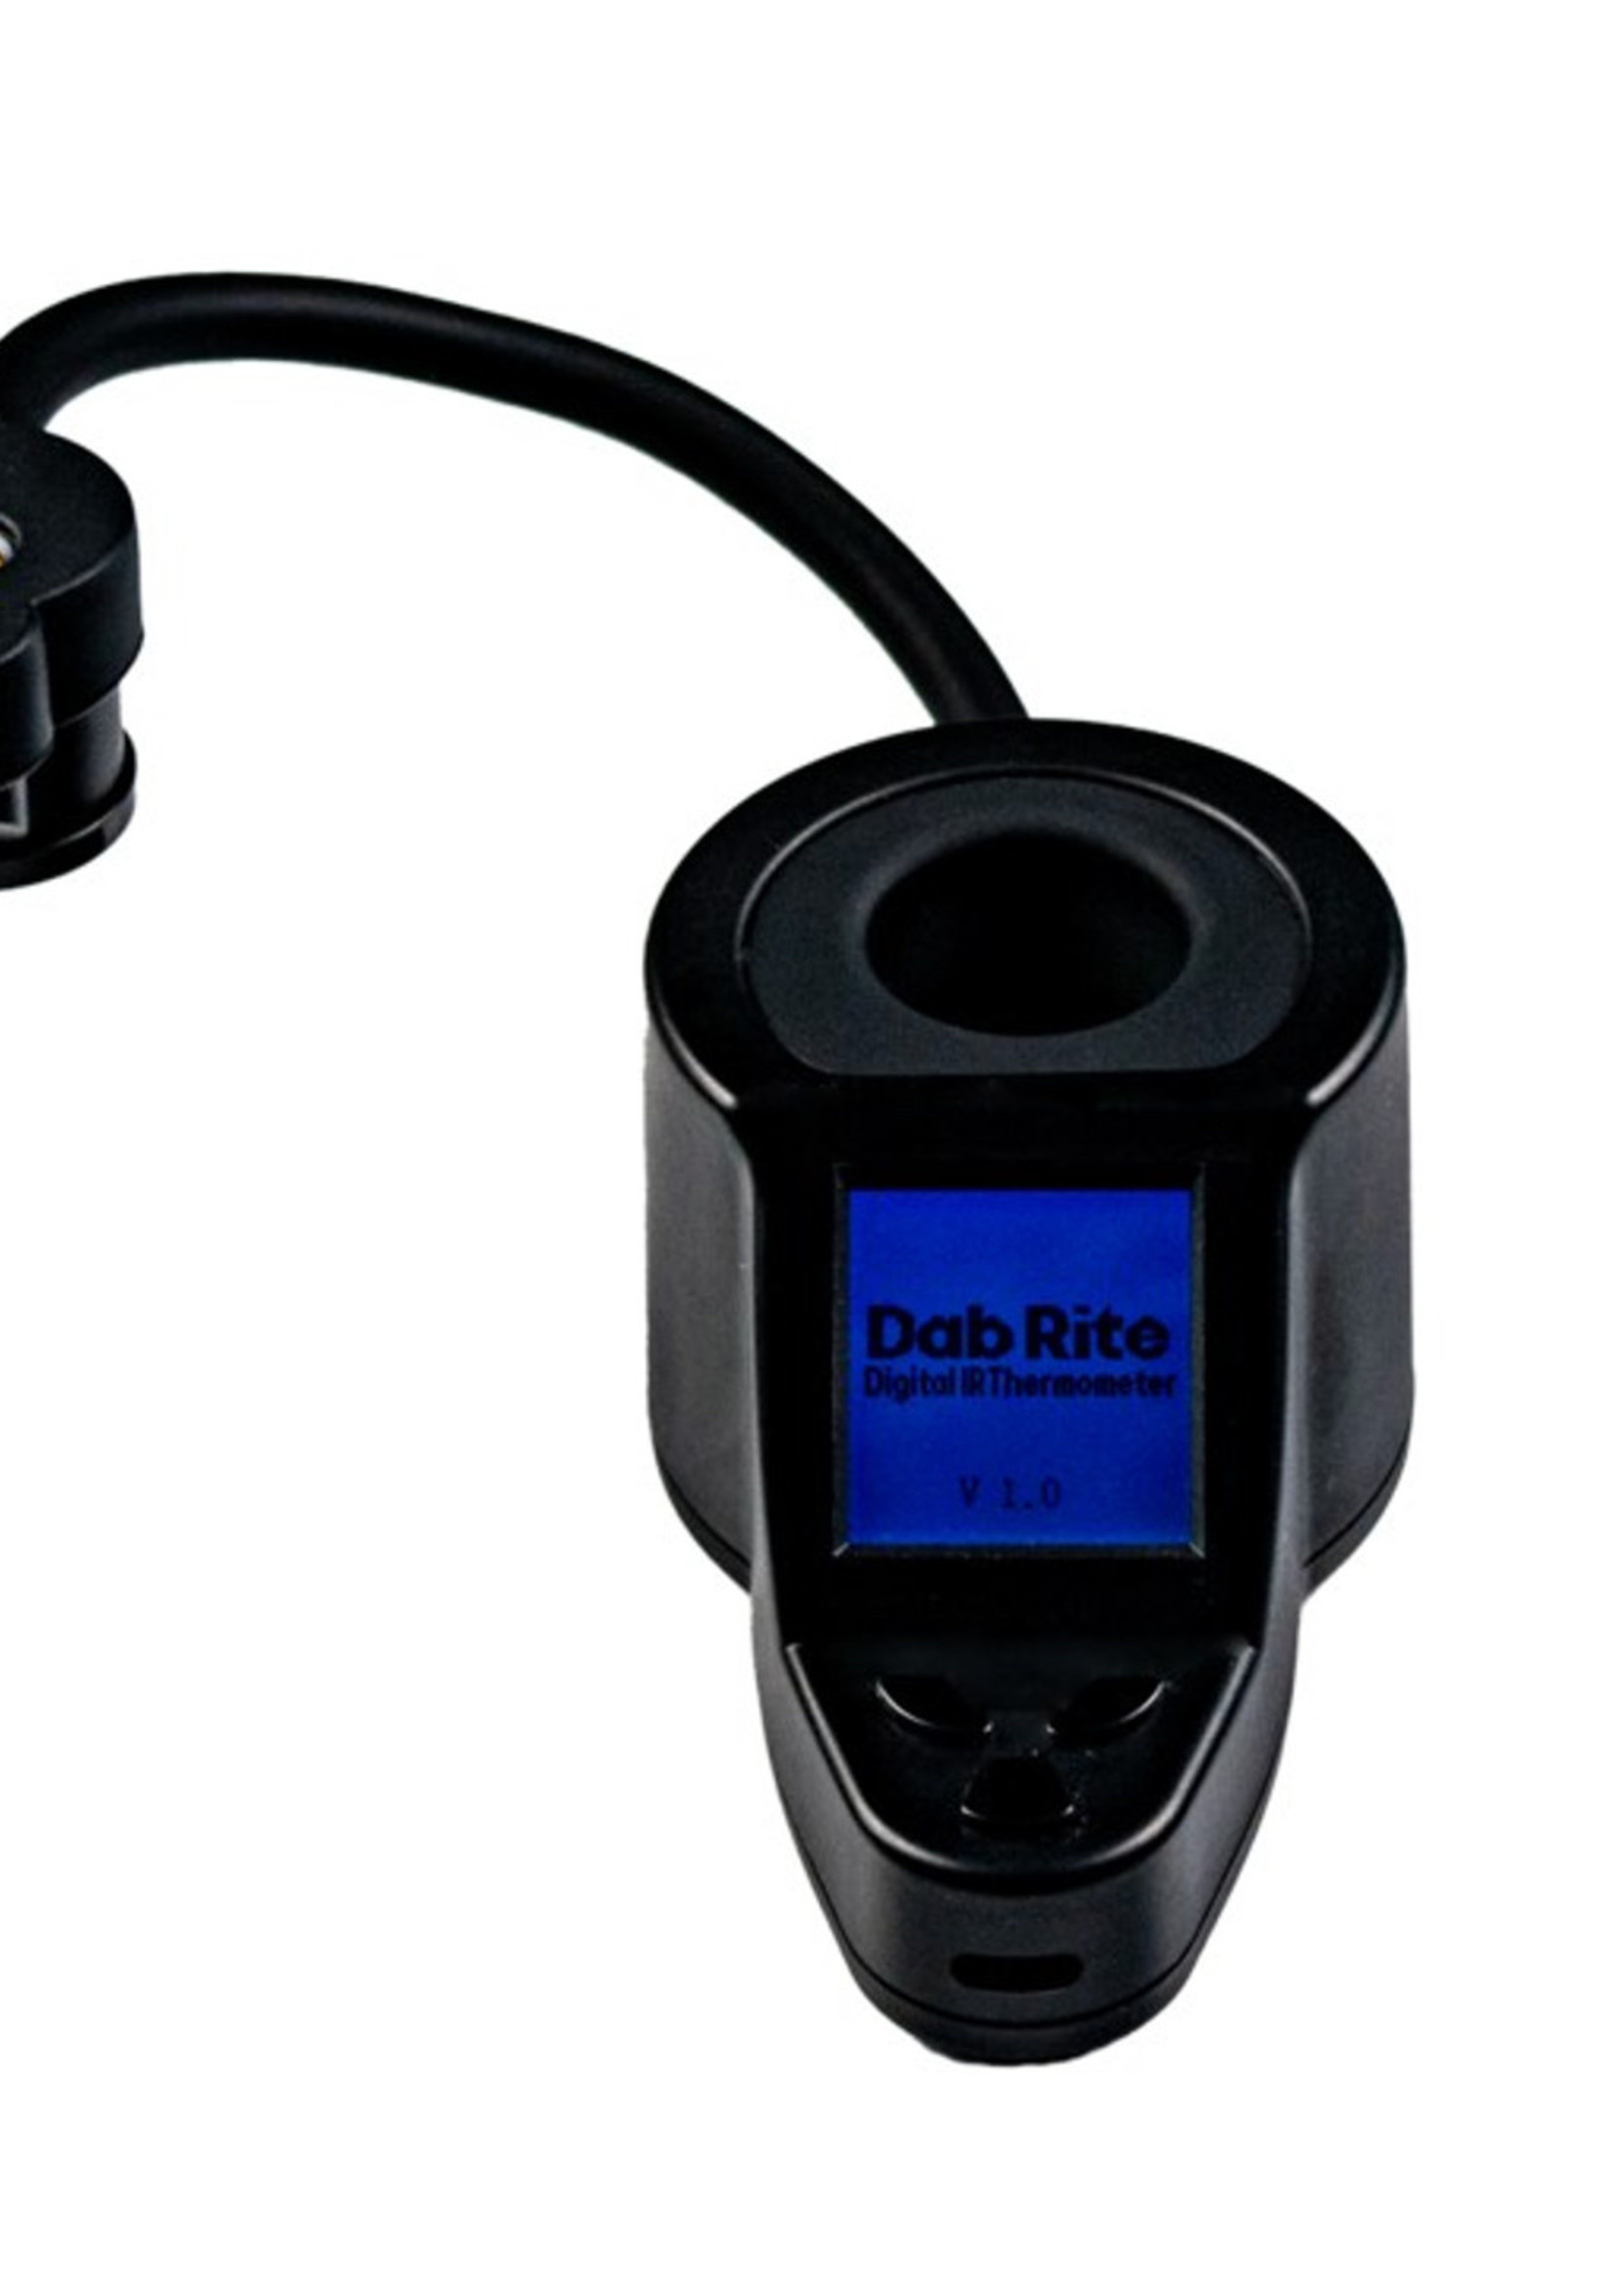 Dab Rite Dab Rite Digital IR Thermometer